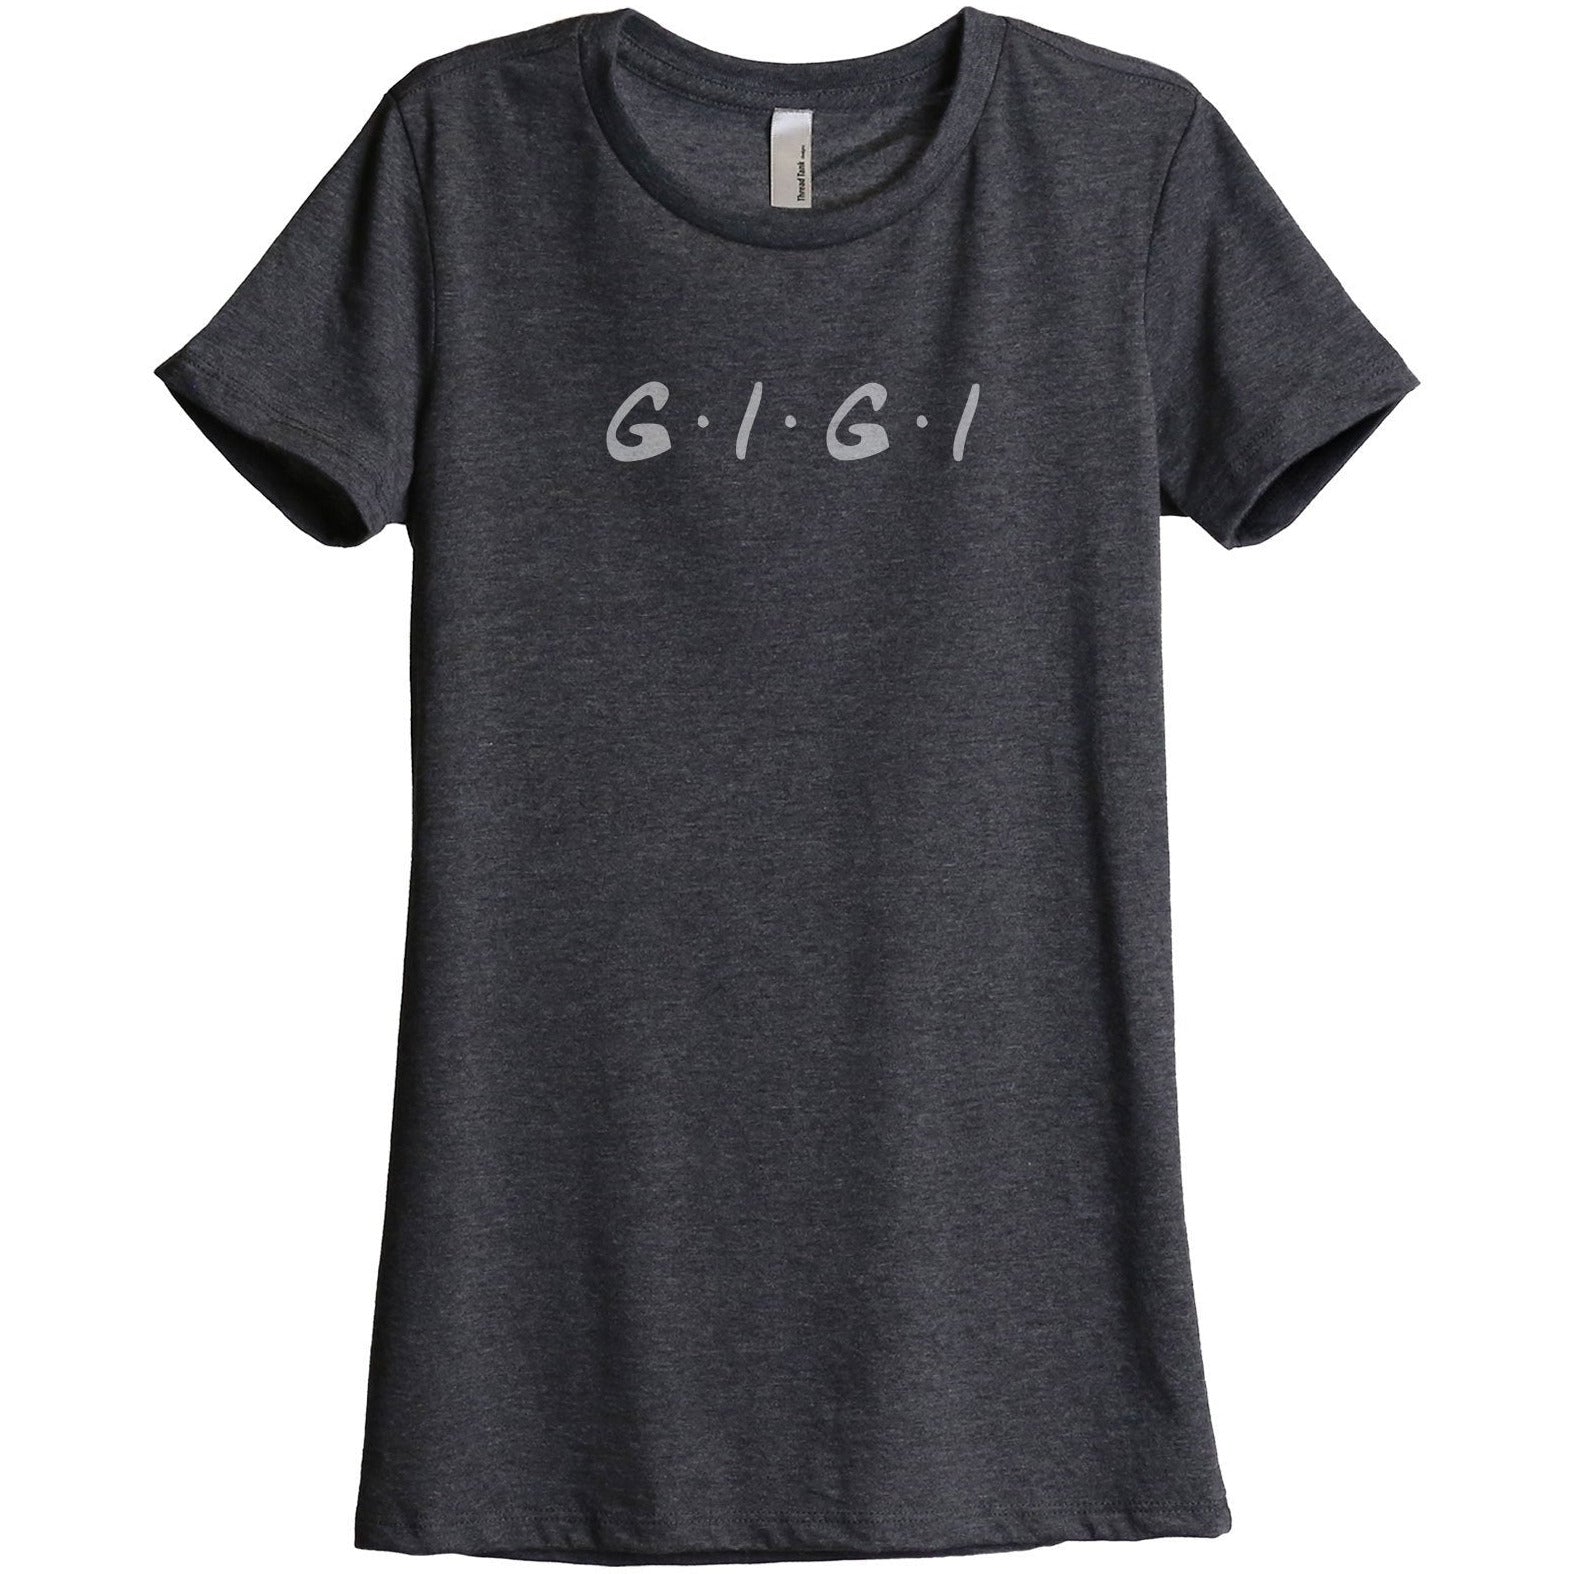 Gigi Friends Women's Relaxed Crewneck T-Shirt Top Tee Charcoal Grey
